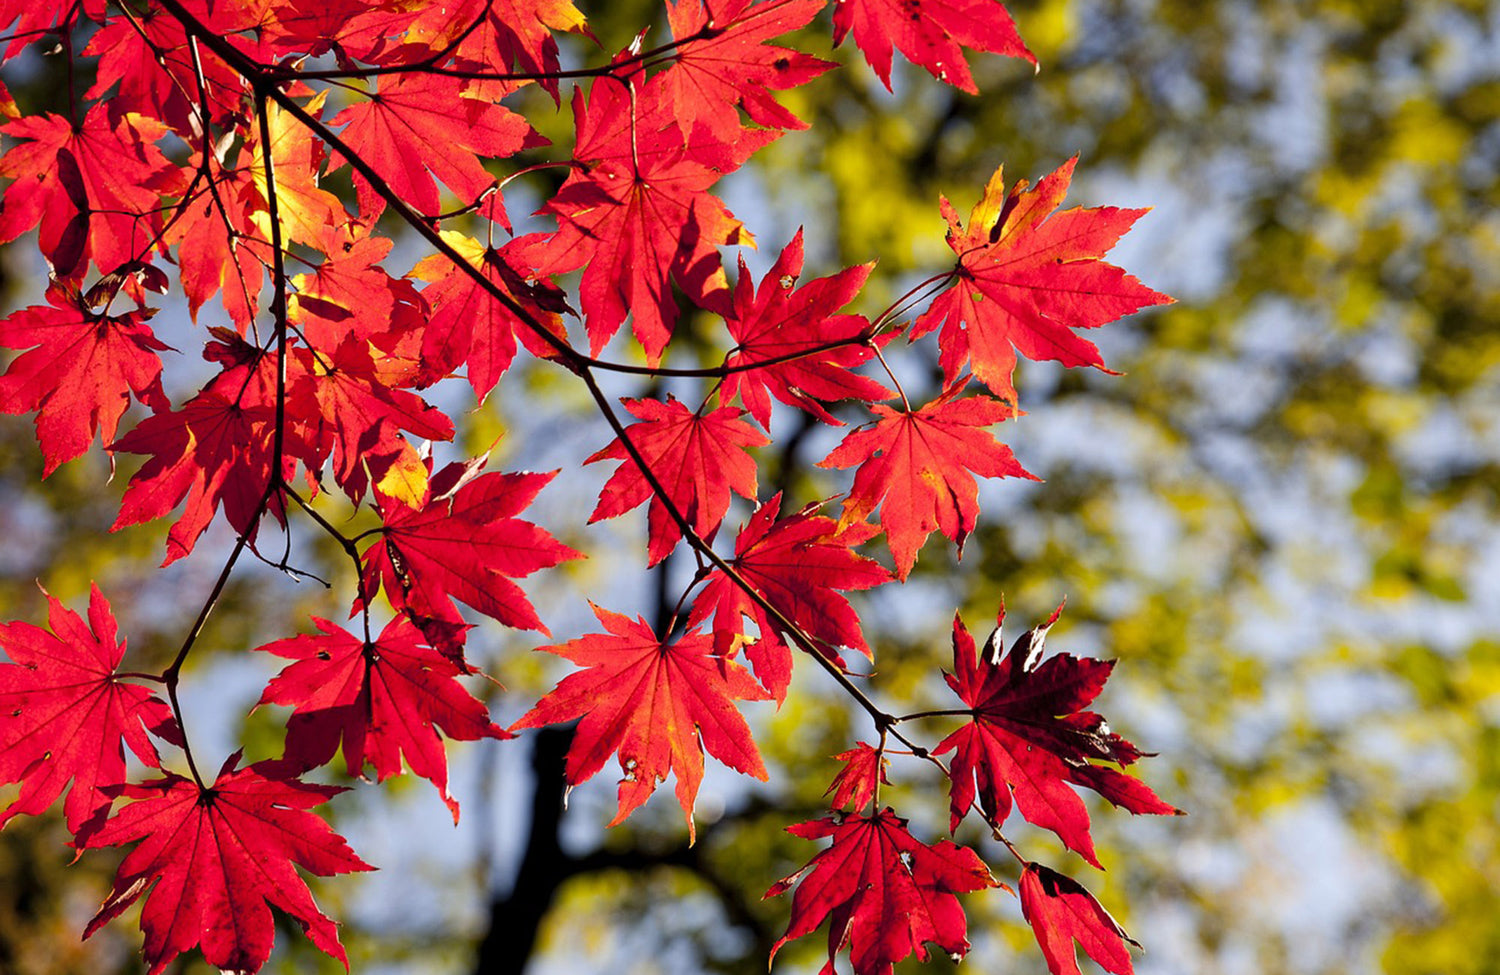 Reddening maple leaves in Melbourne's Autumn